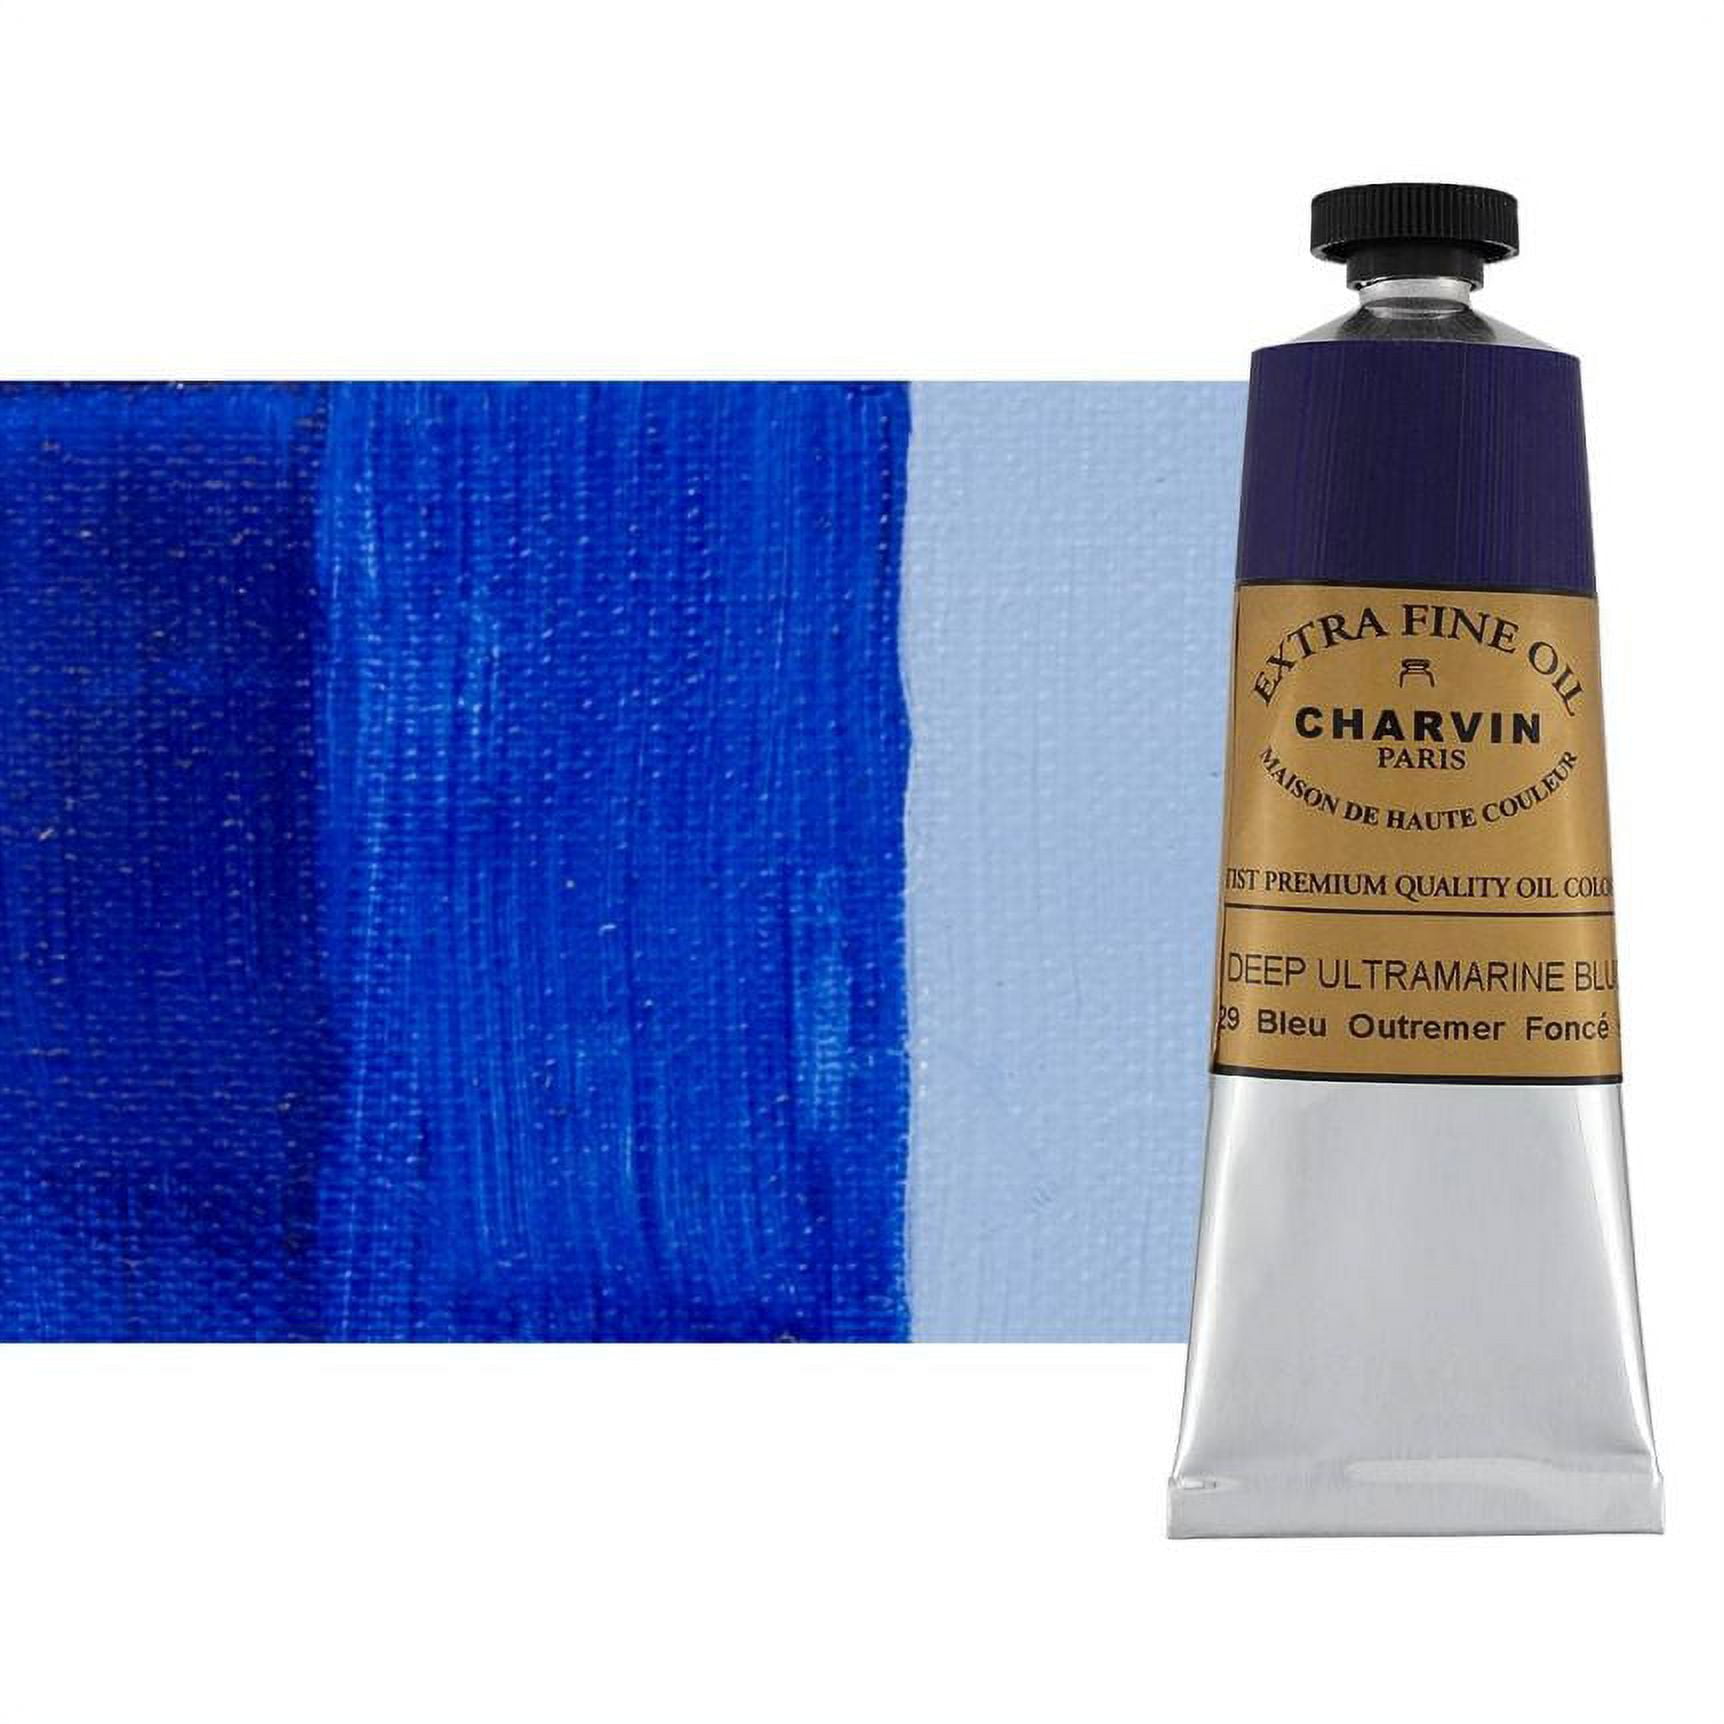 Charvin Oil Paints - Largest Colour Range in the World - Jackson's